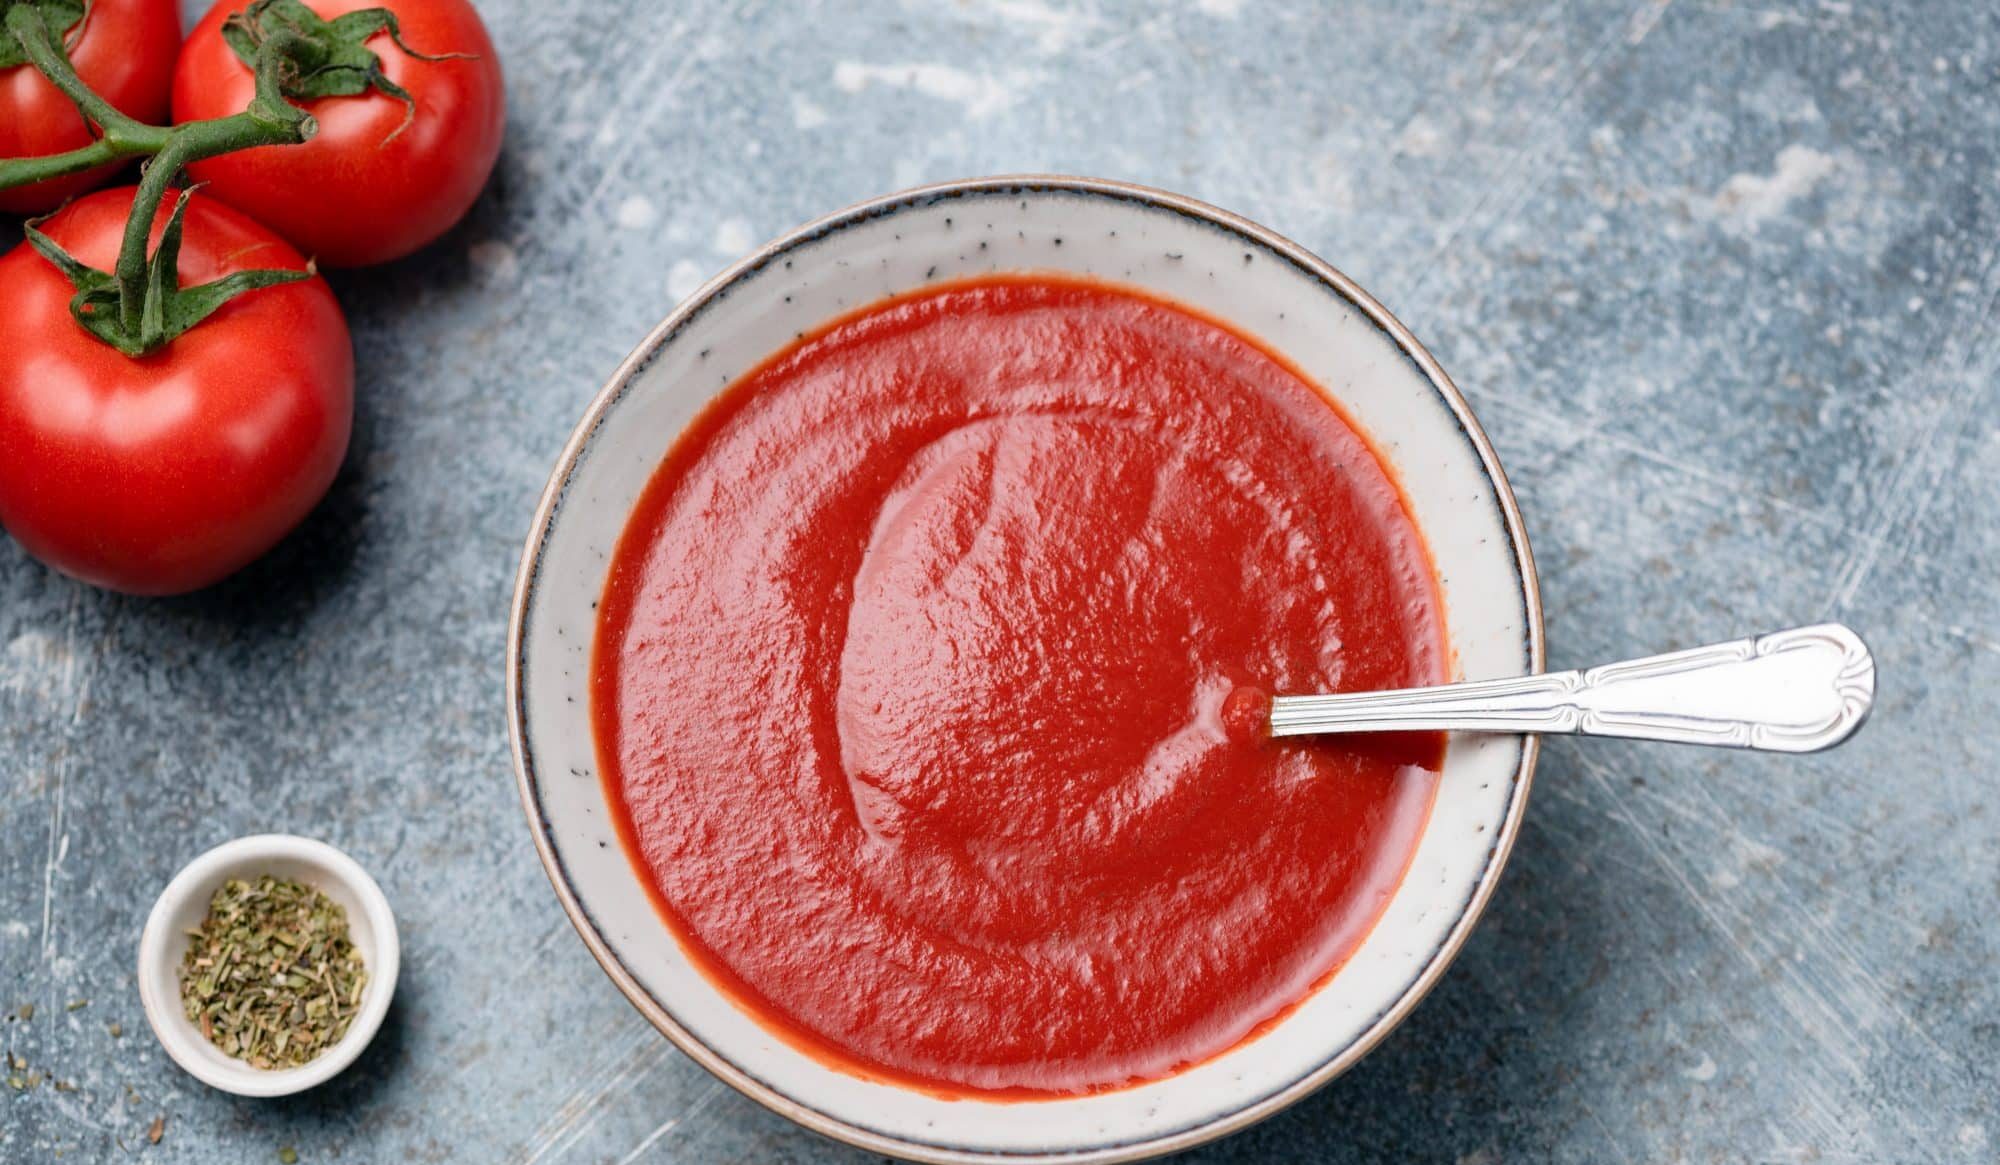 Make tomato puree